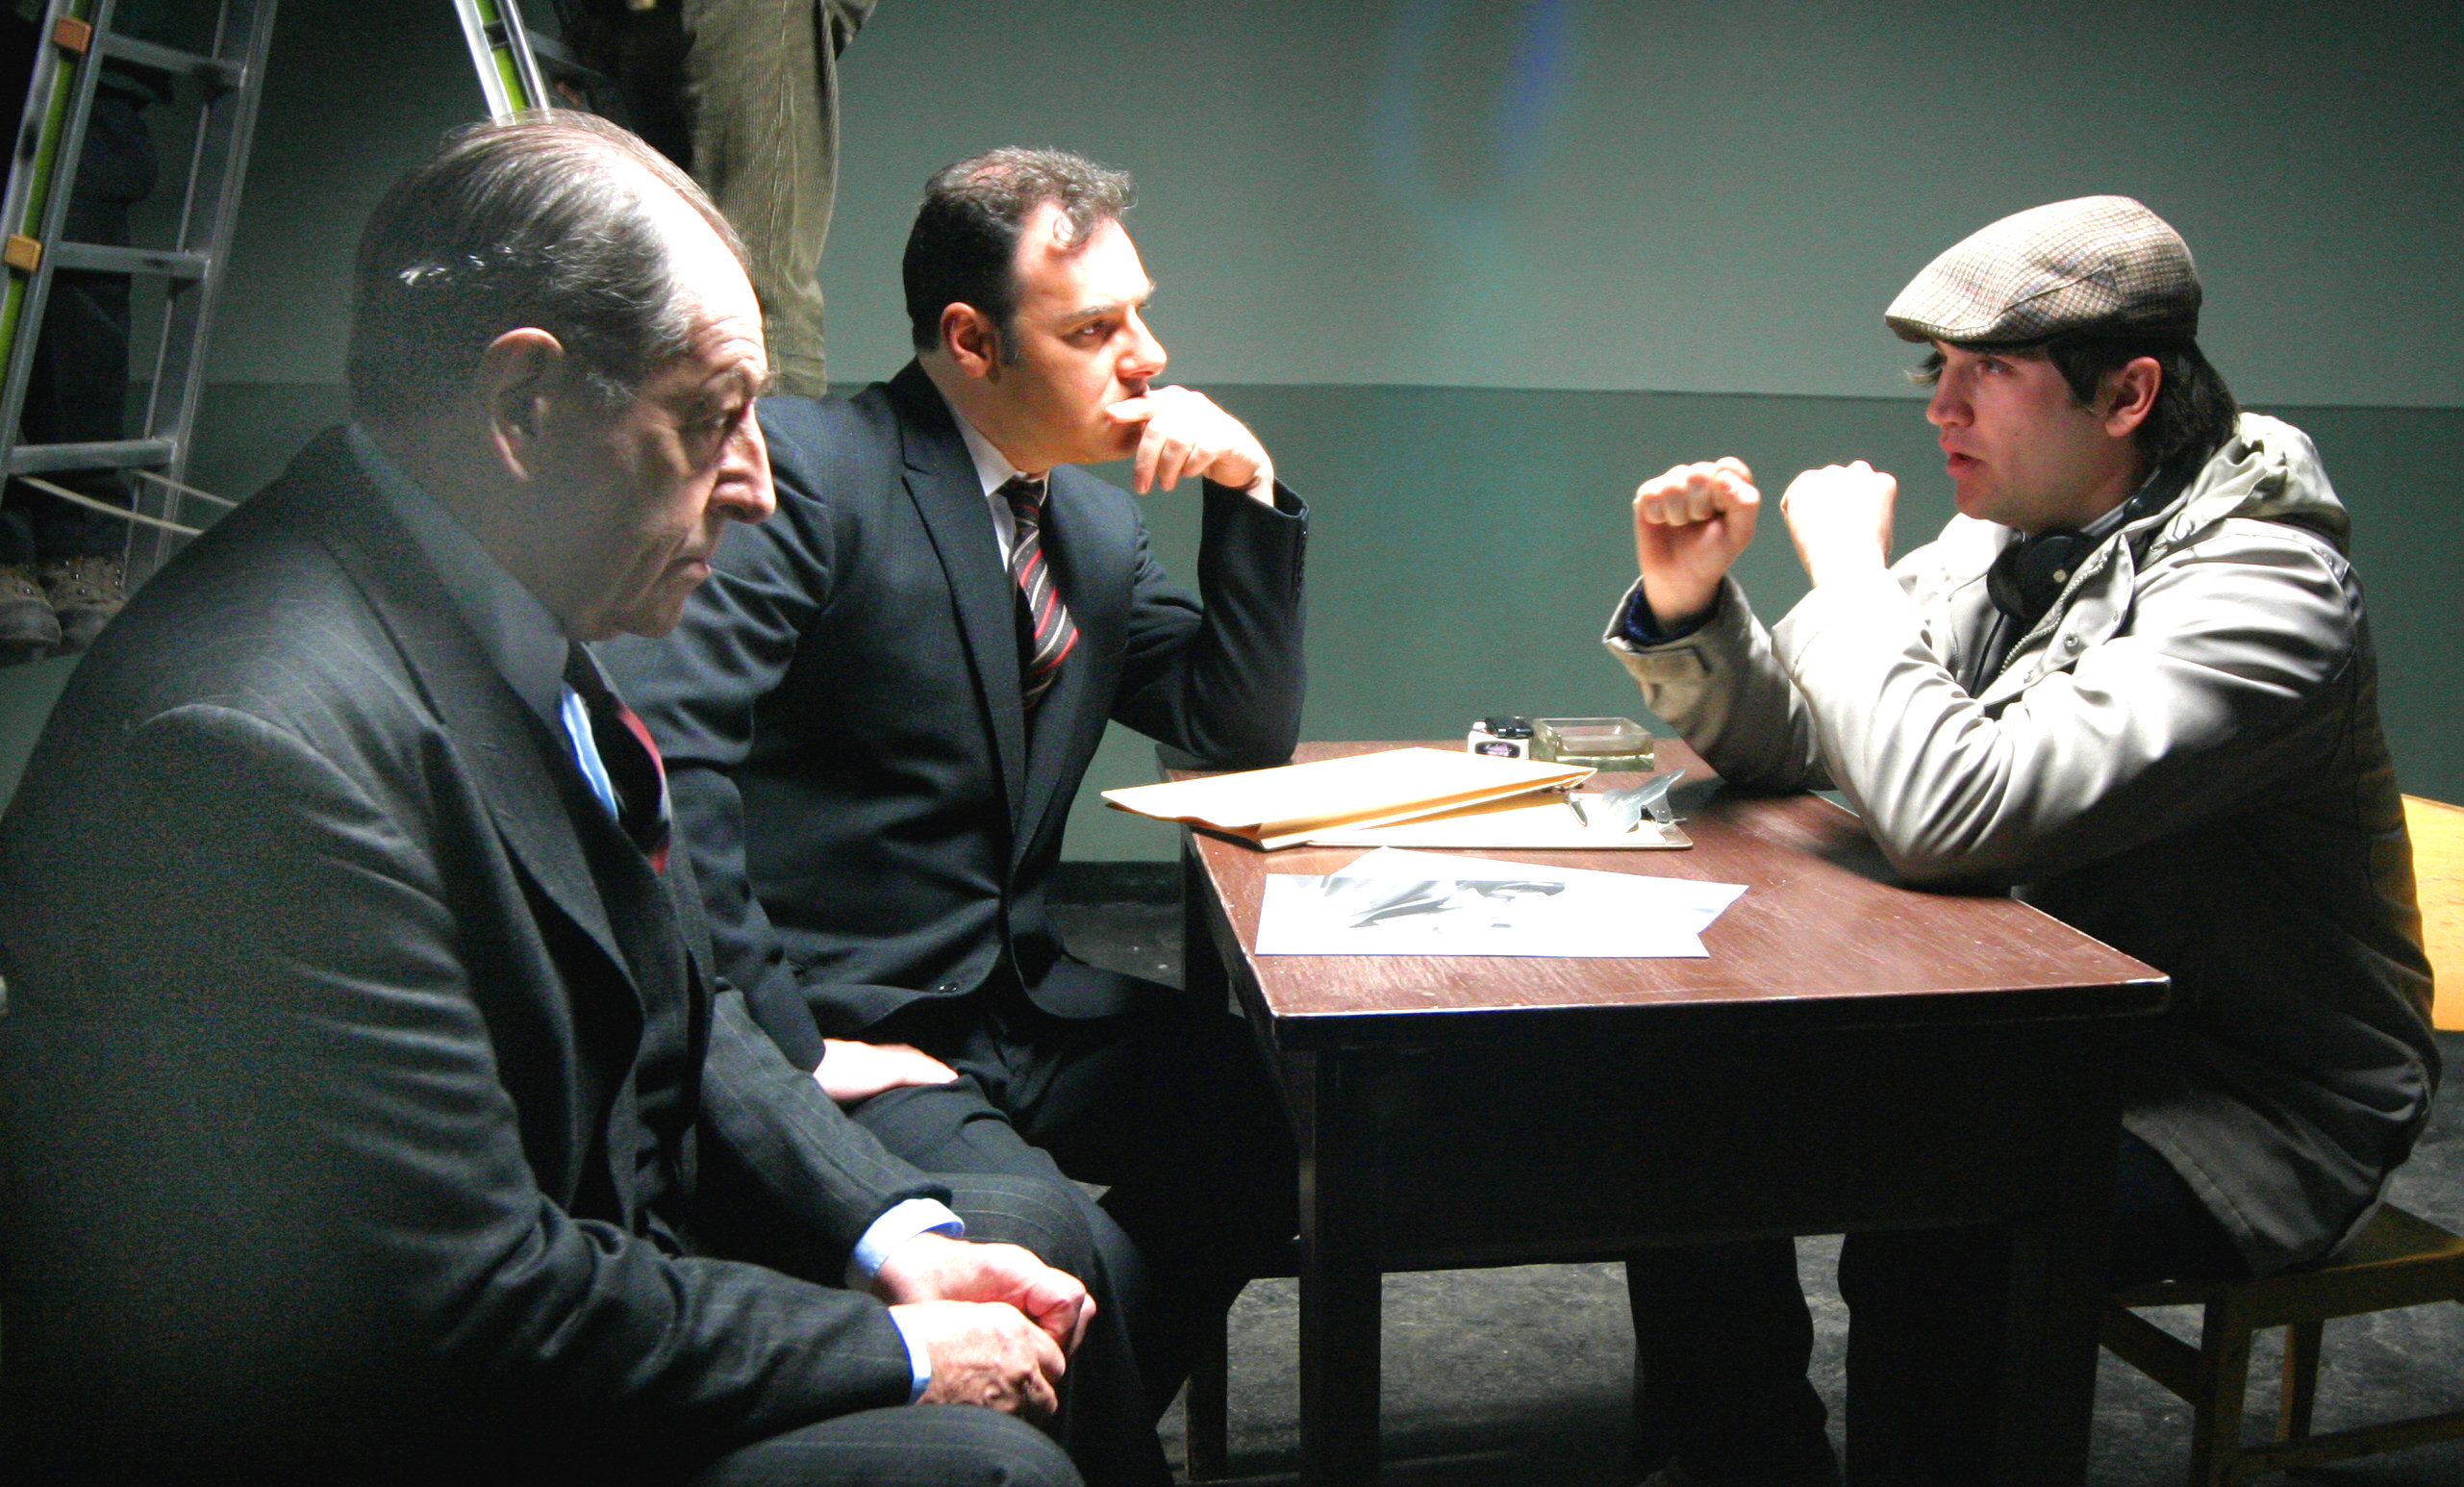 Reg Traviss discusses scene with Sean Chapman and Bernard Kay on set (2005)